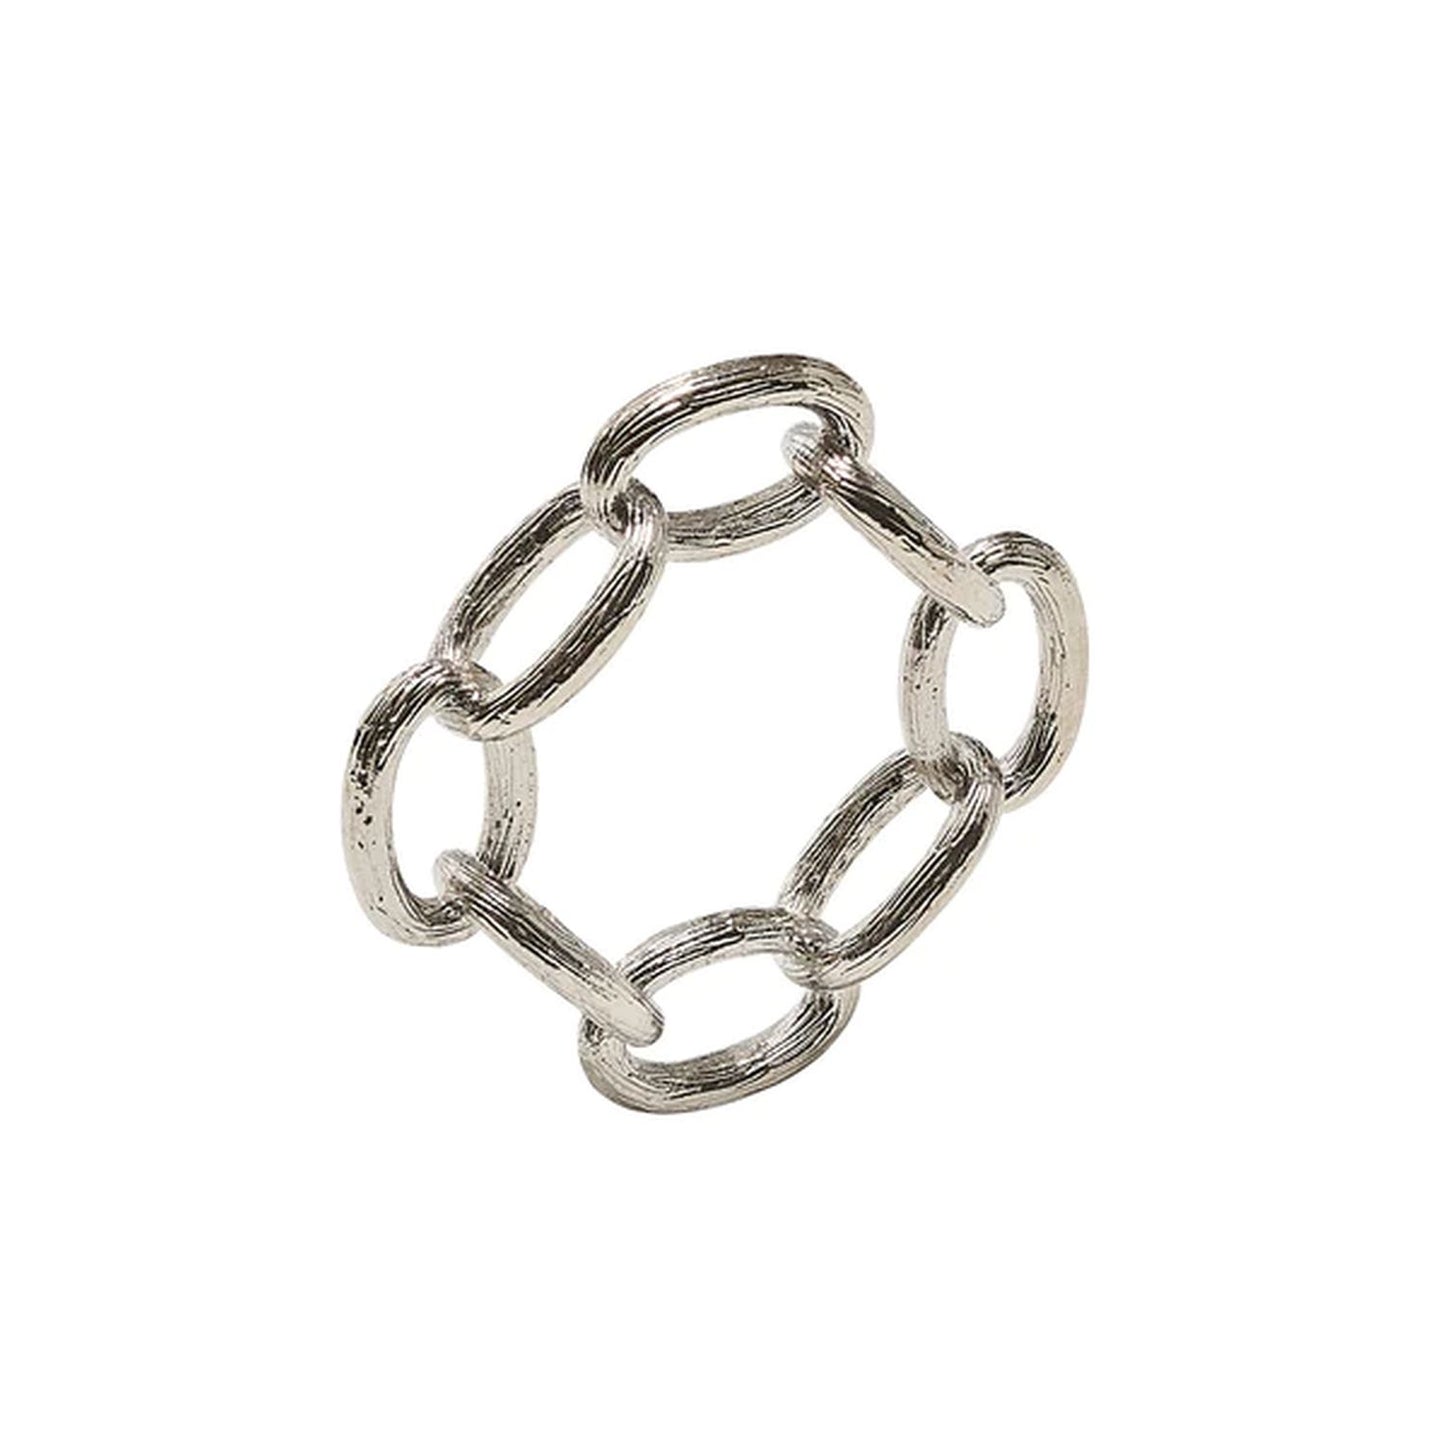 Kim Seybert Chain Link Napkin Ring in Silver, Set of 4